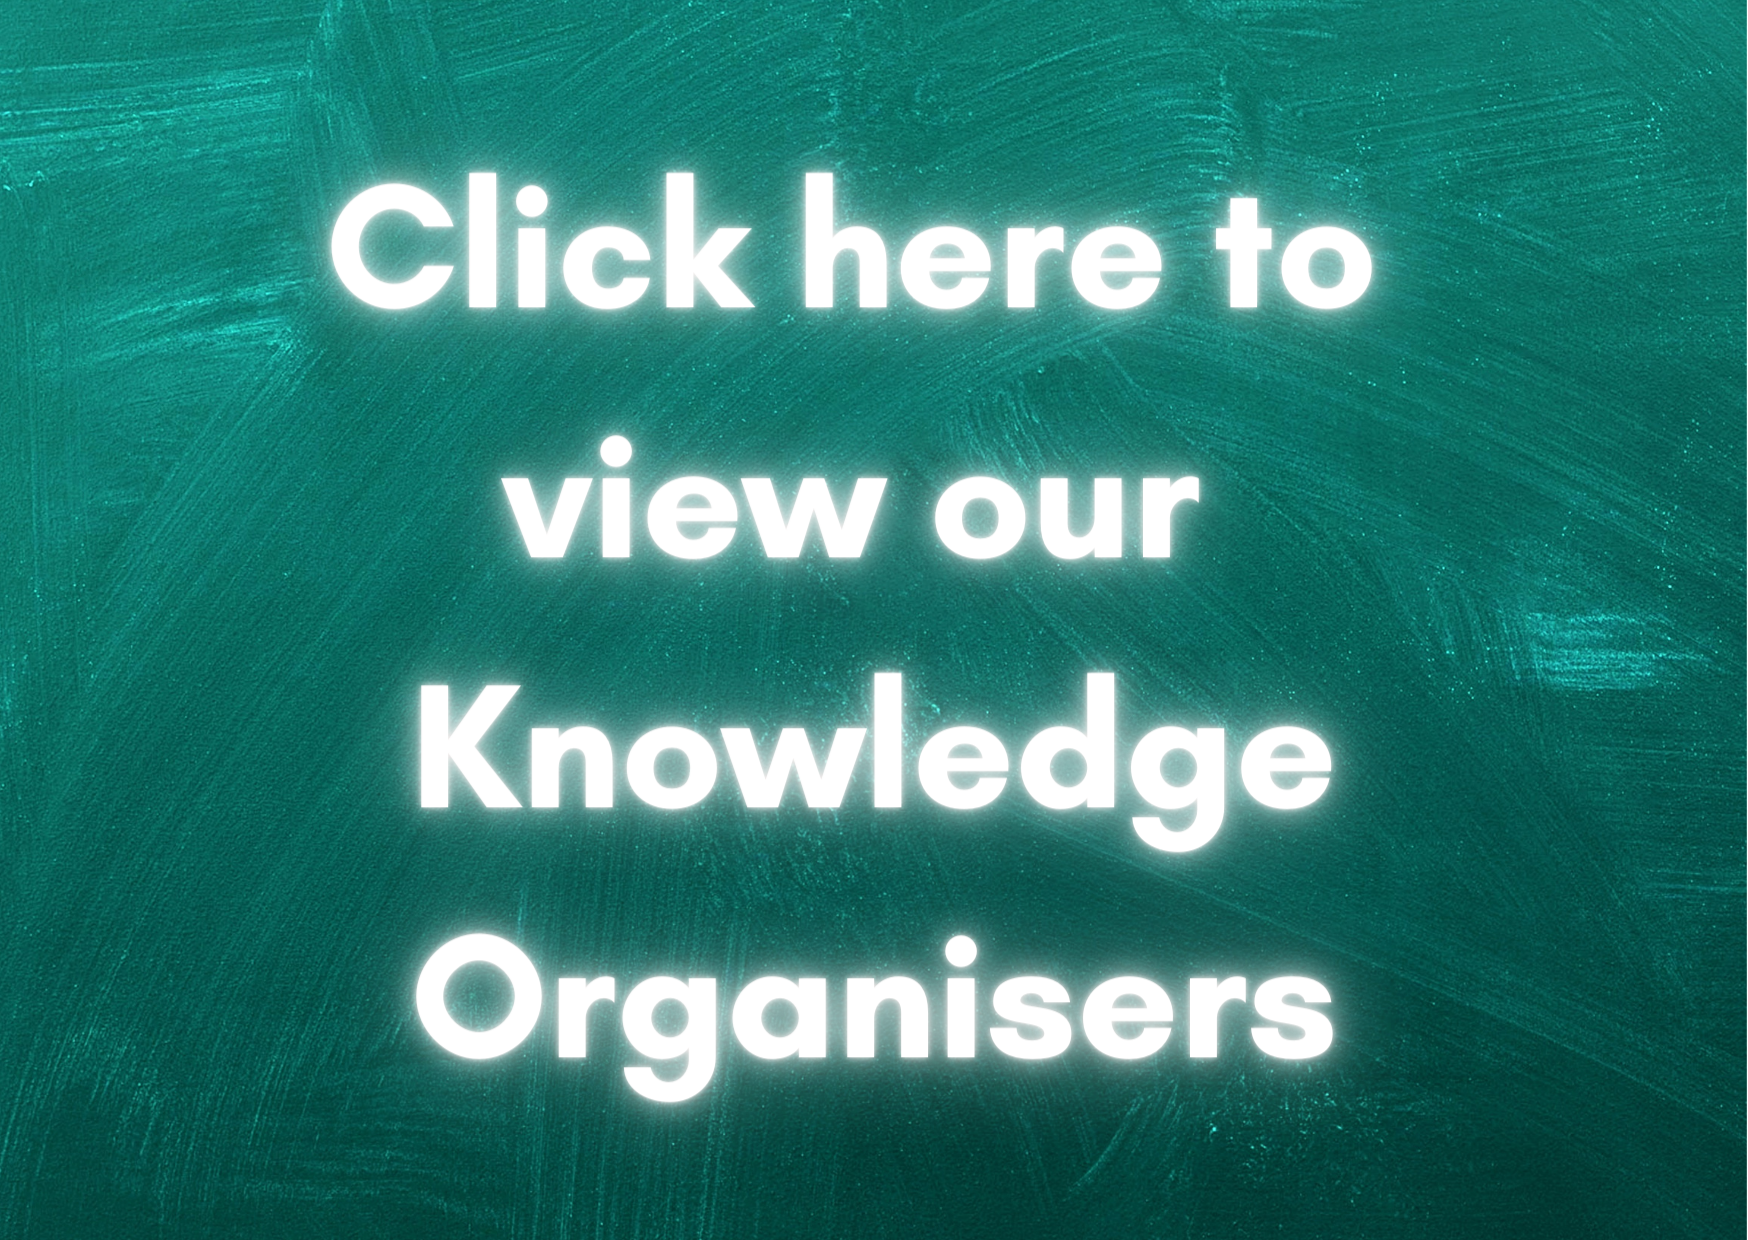 Knowledge Organiser